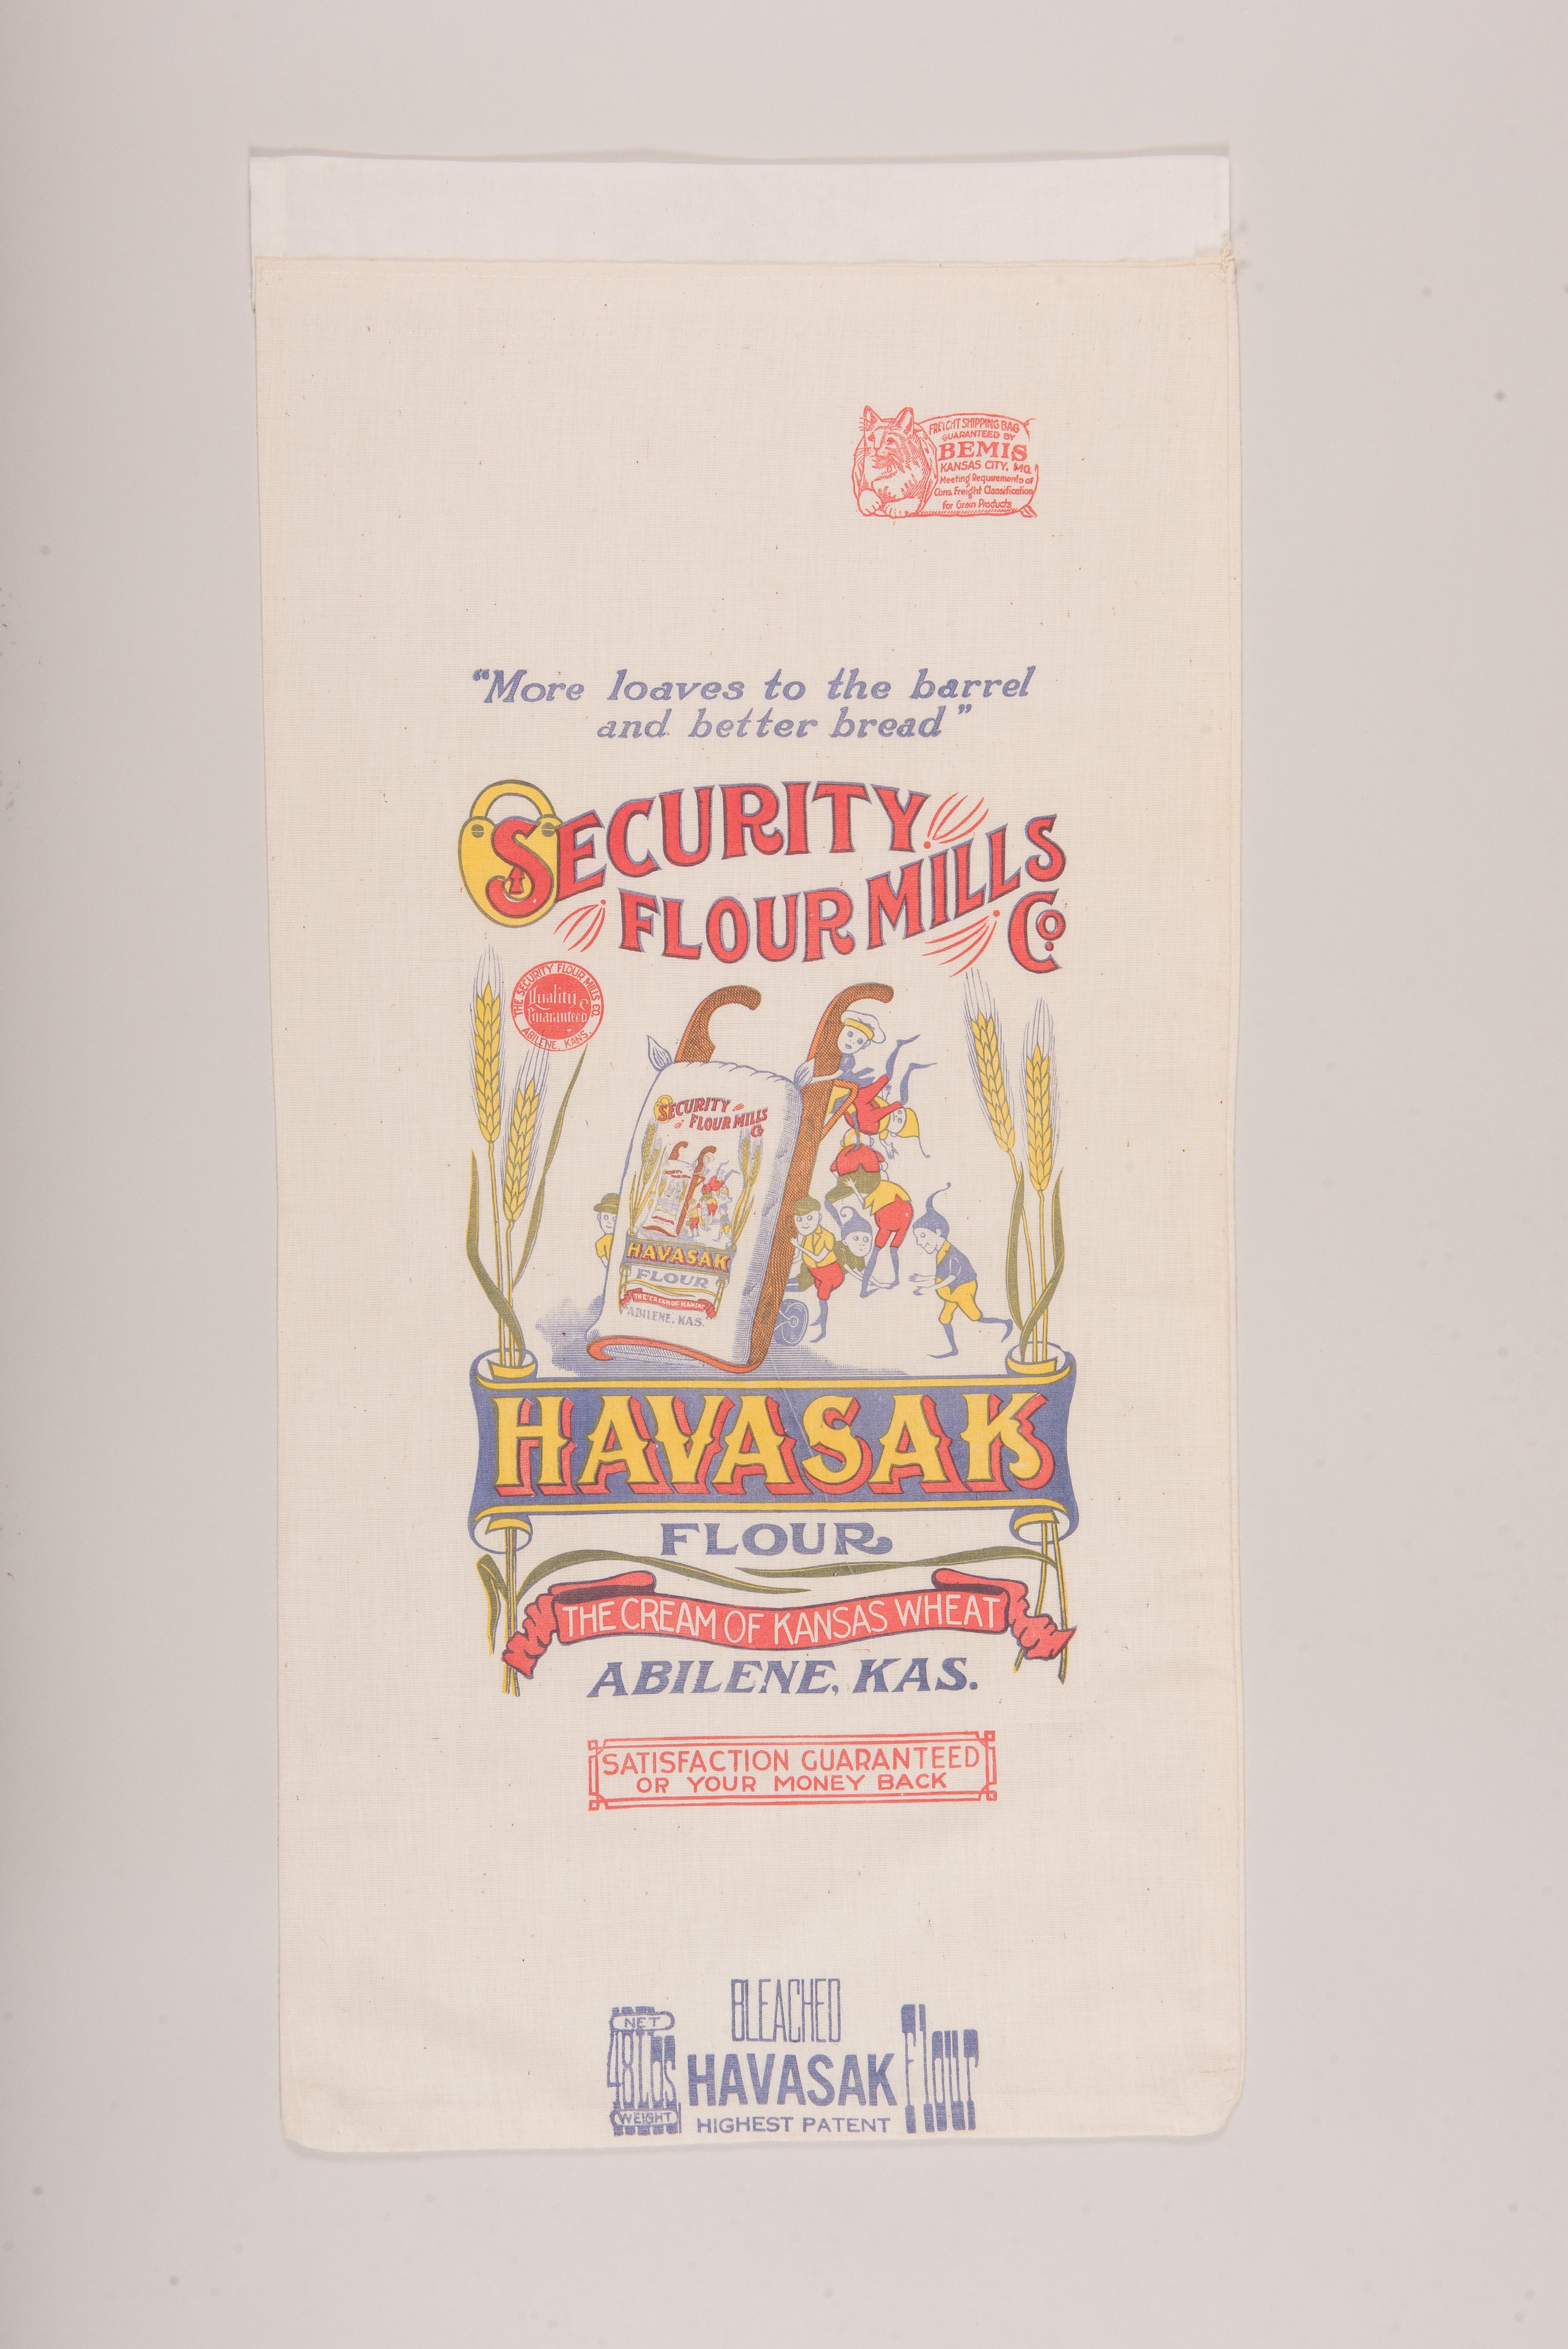 Flour sack on exhibit at NSU library